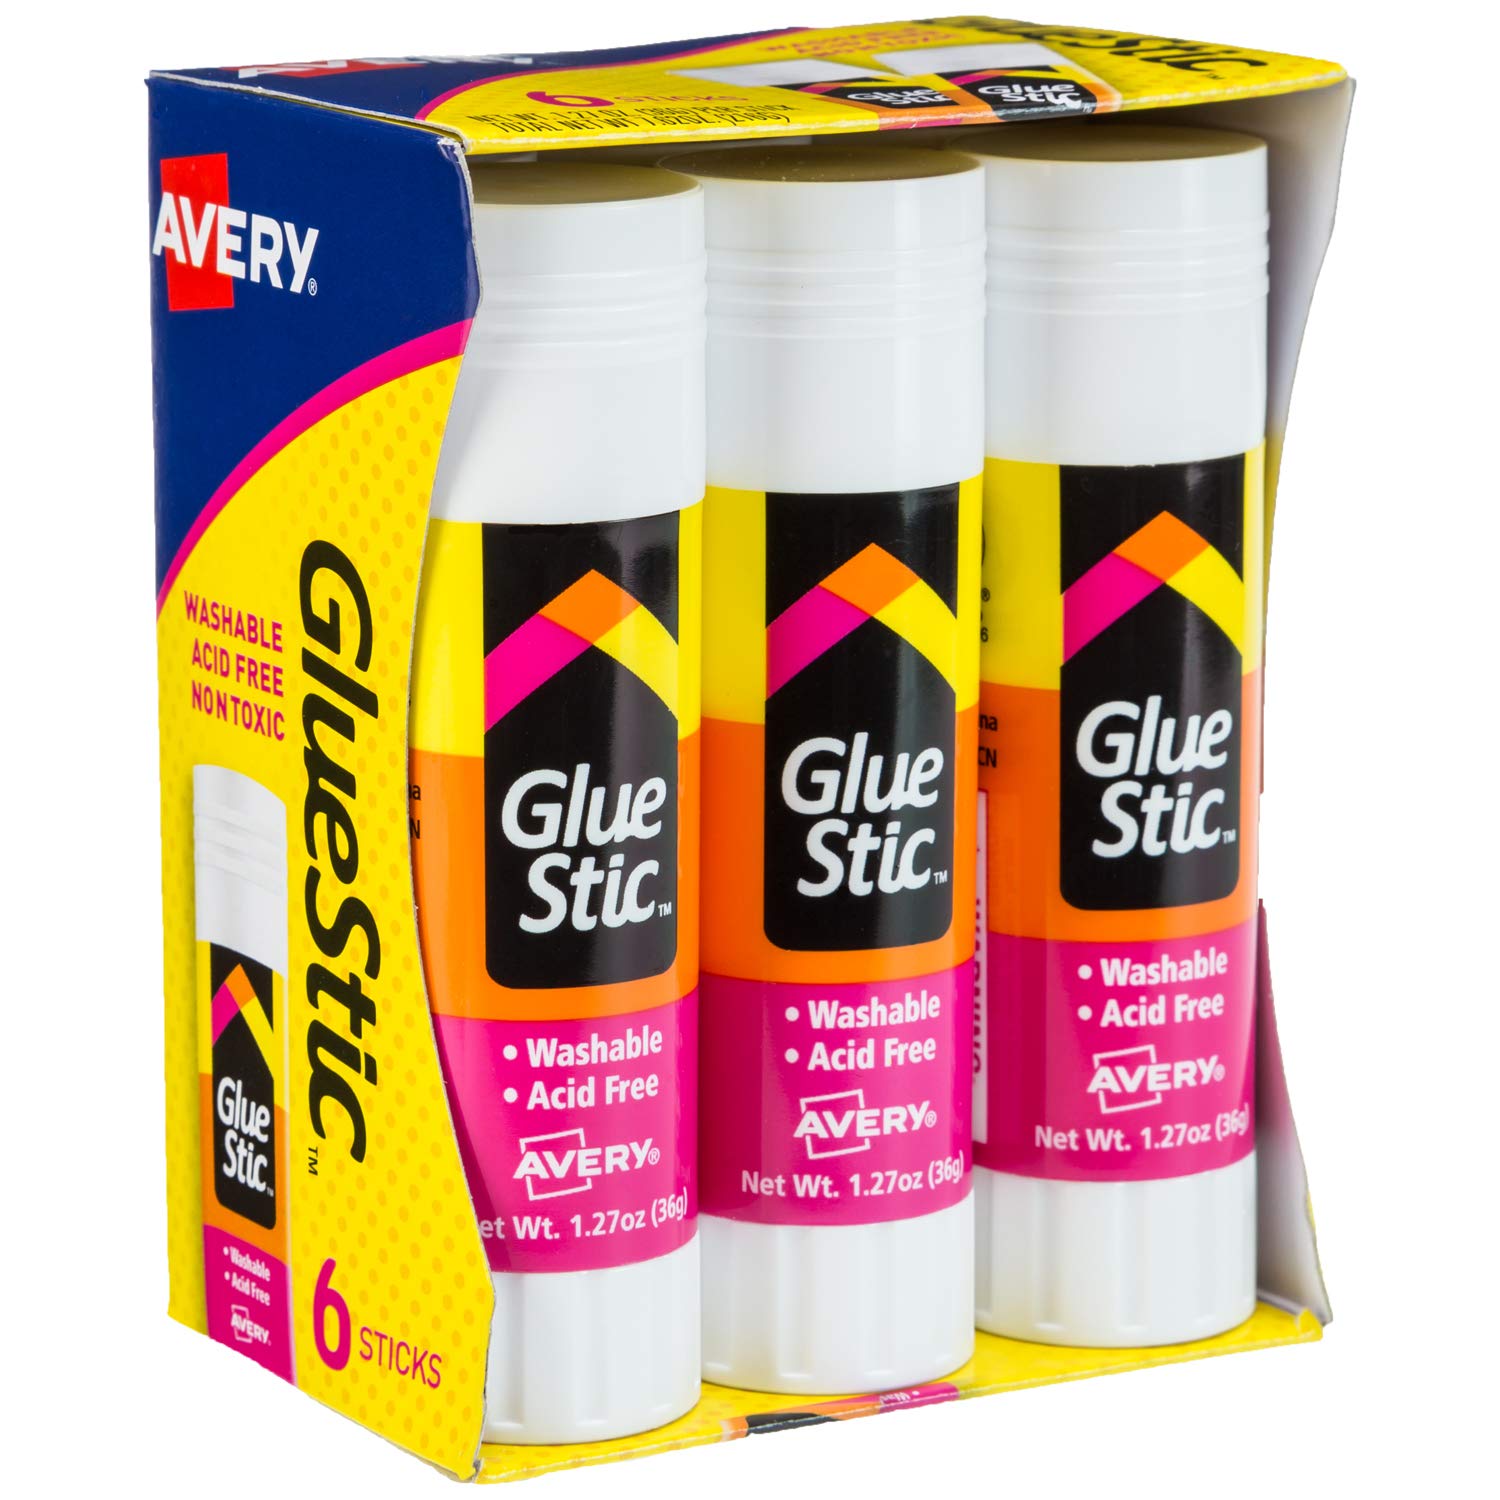 Book Cover AVERY Glue Stick White, Washable, Nontoxic, 1.27 oz. Permanent Glue Stic, 6pk (98073),Clear 6 sticks